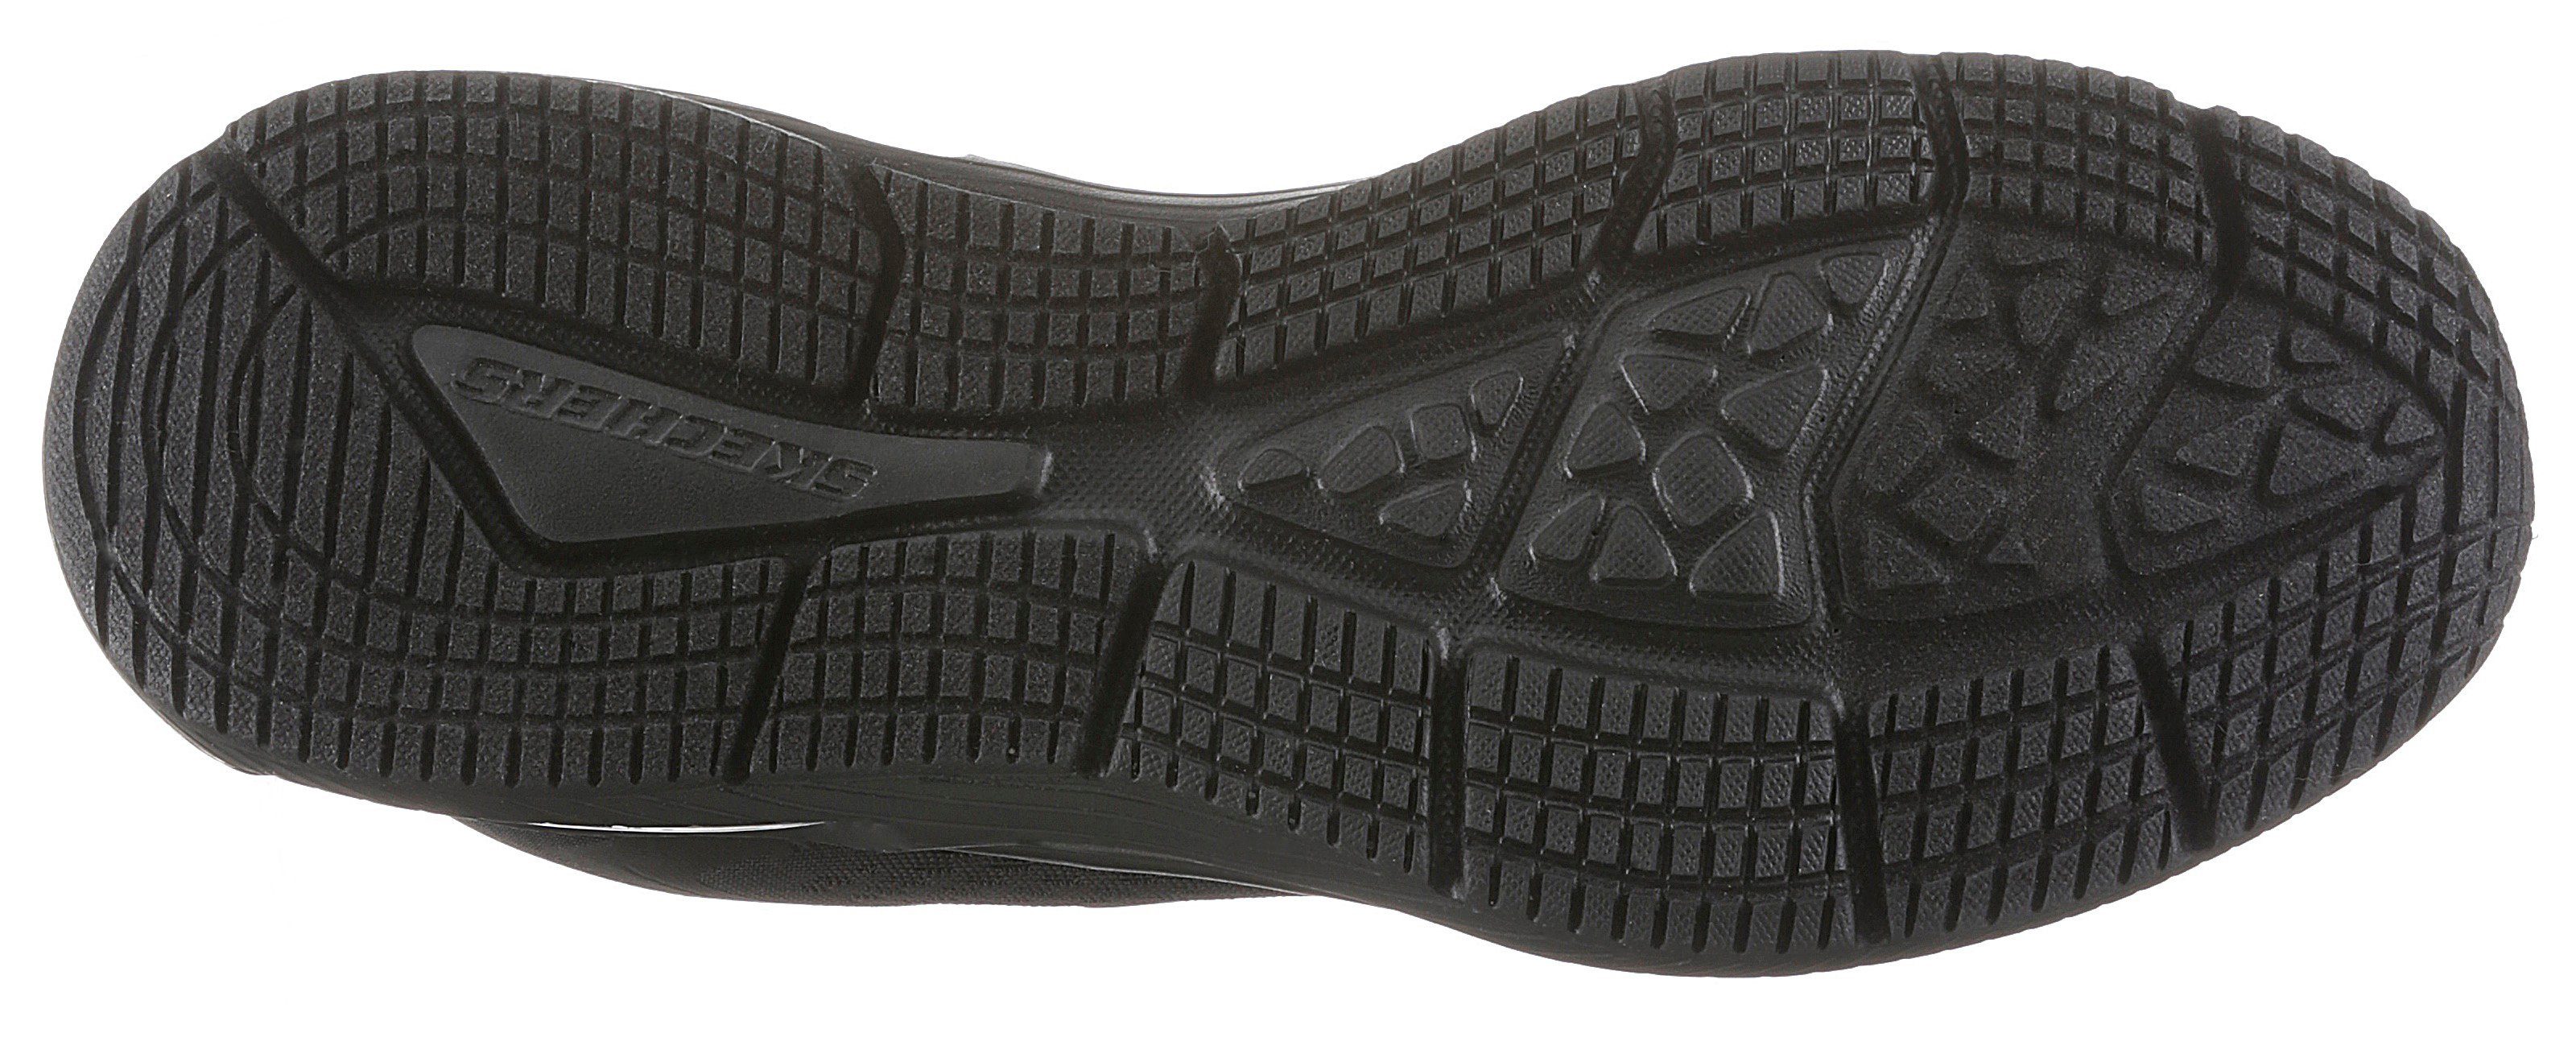 Skechers Dyna Air-Cooled schwarz mit Air Sneaker Memory Foam